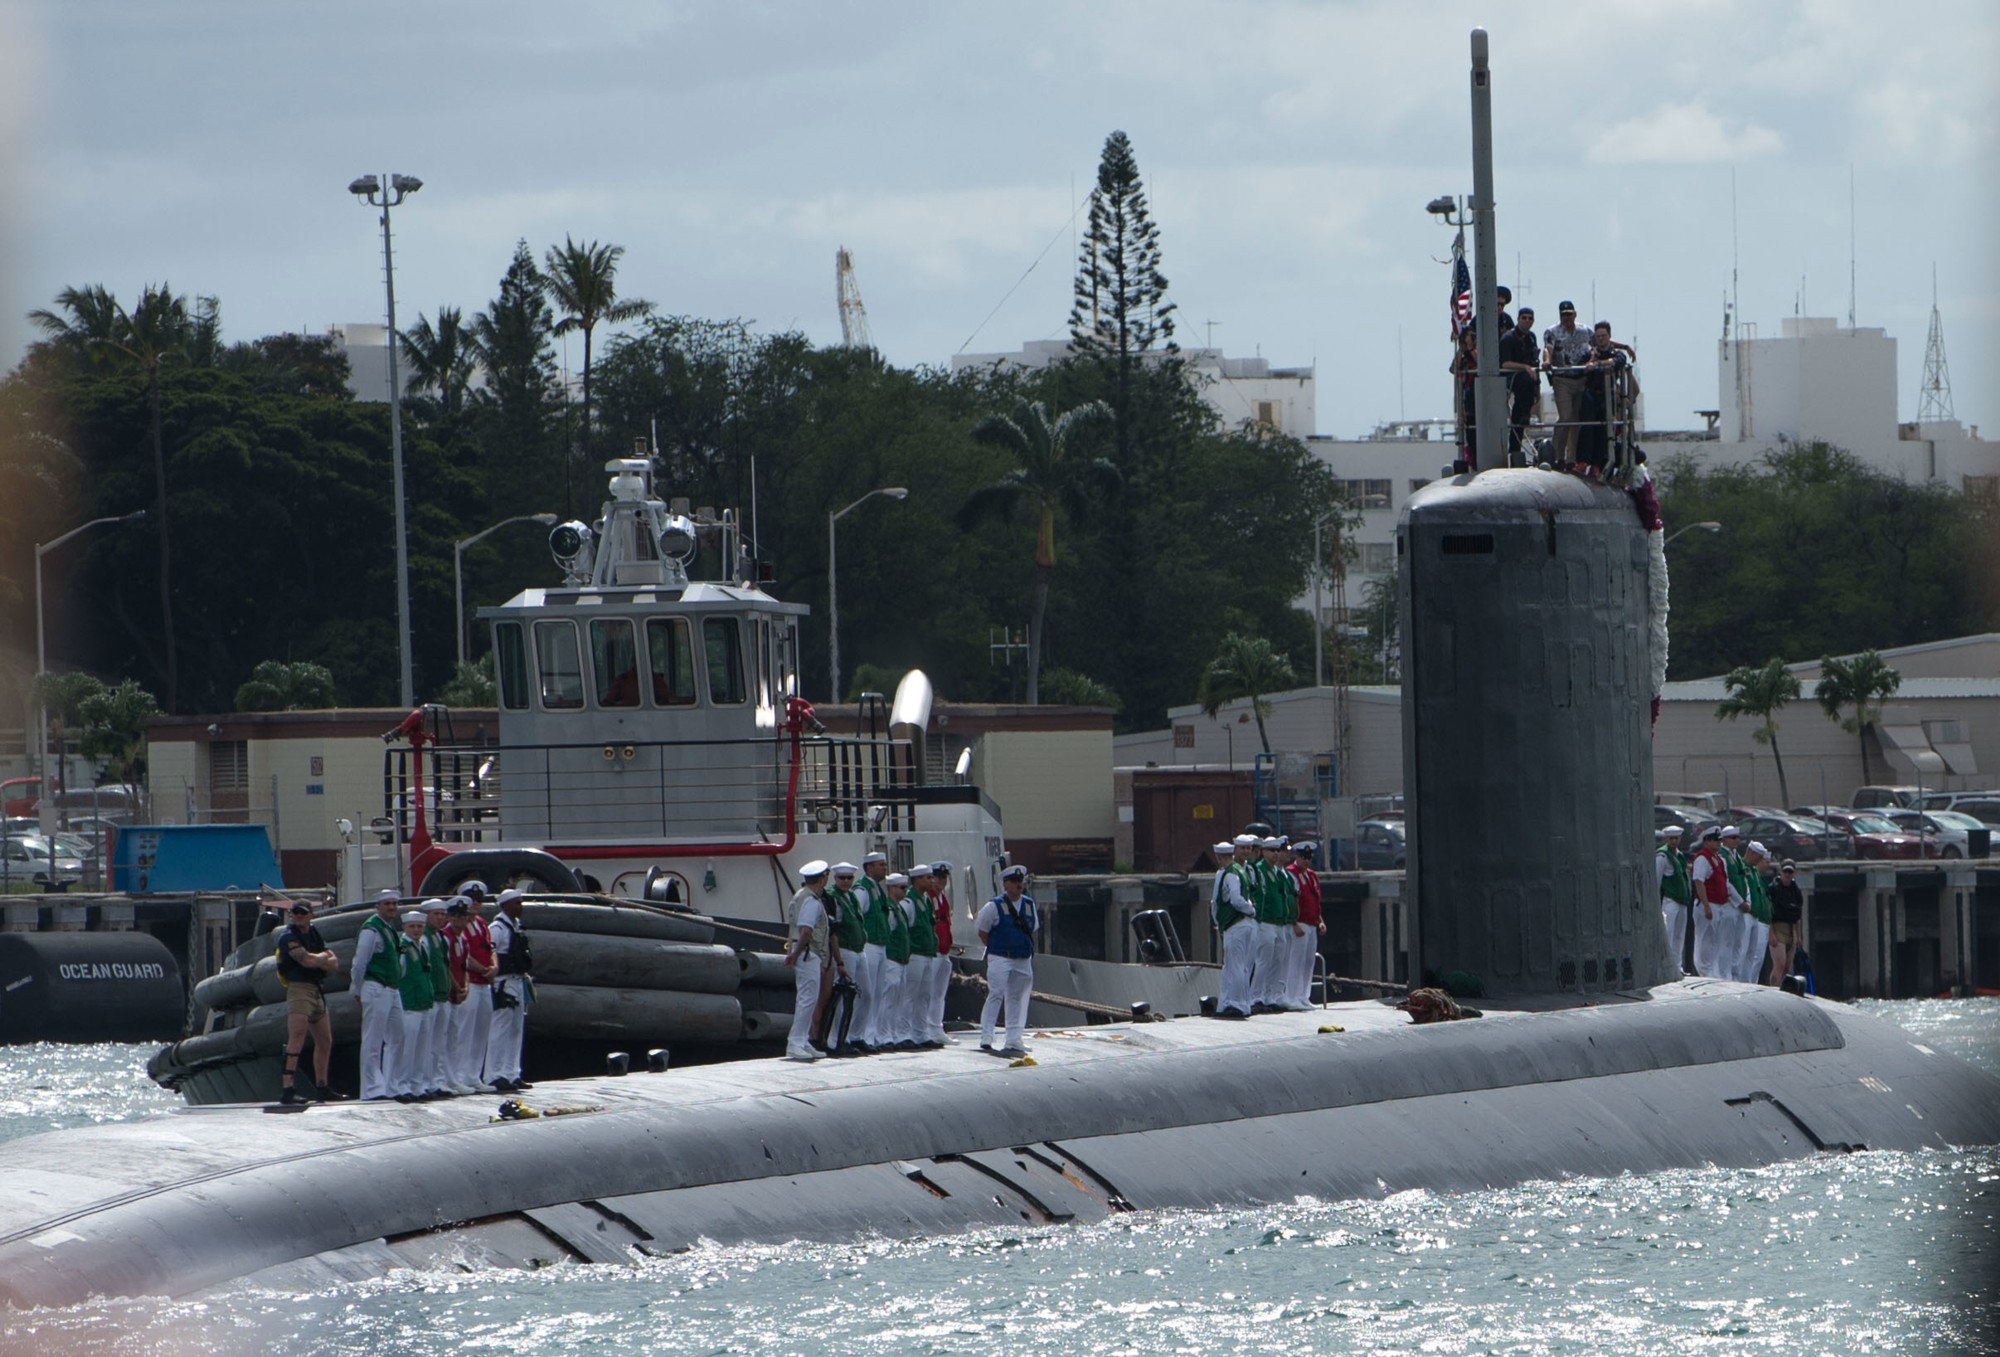 ssn-782 uss mississippi virginia class attack submarine us navy 40